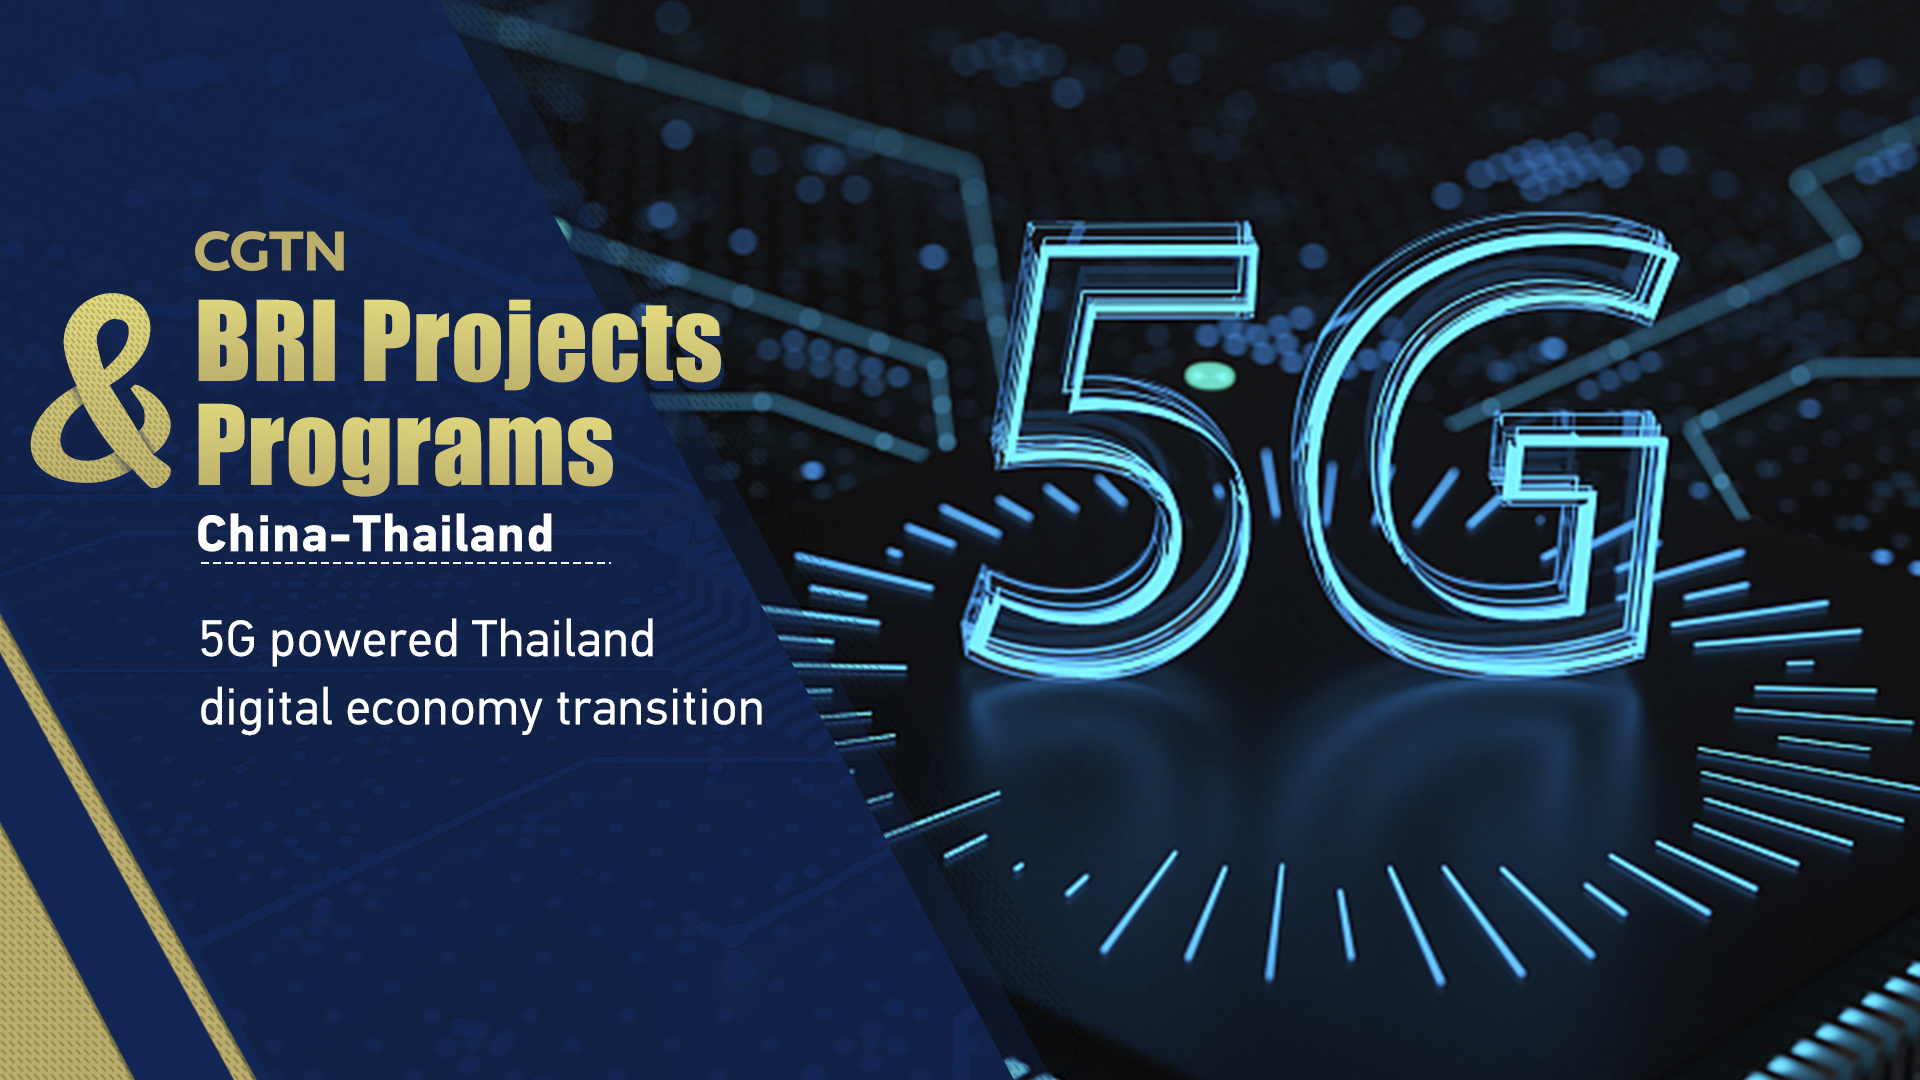 BRI Projects & Programs: China's 5G powers Thai digital economy transition